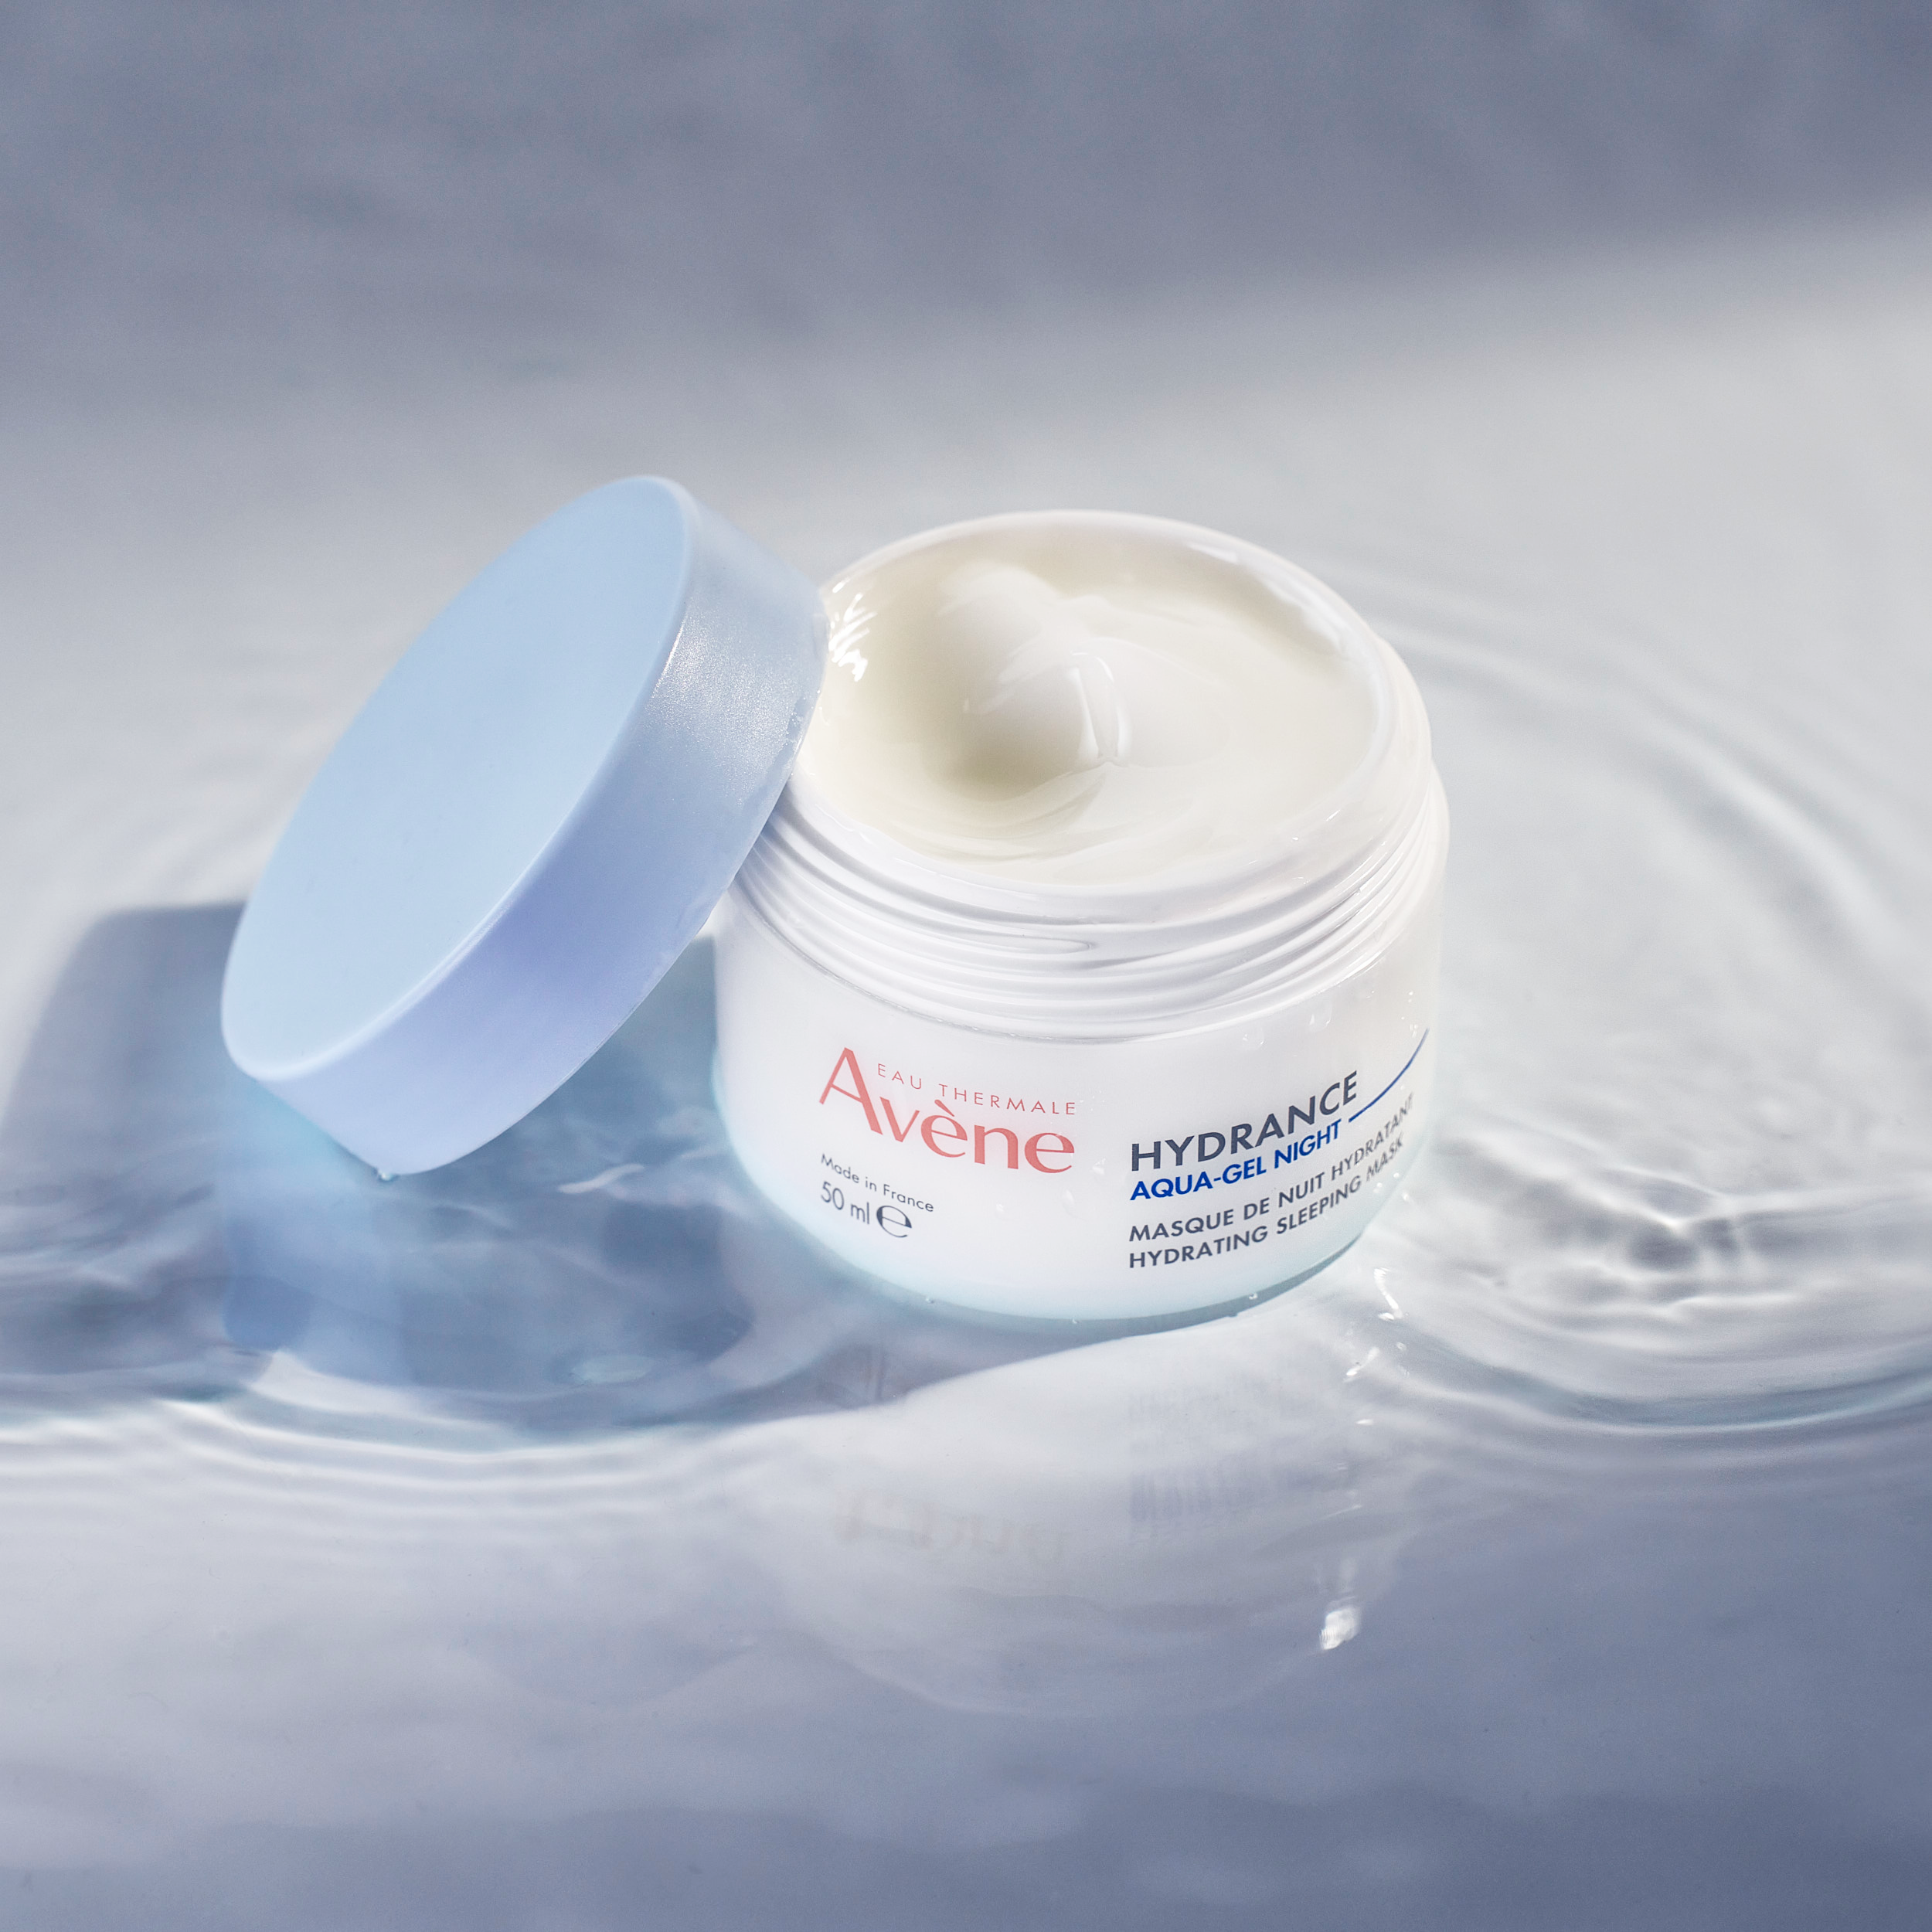 Avène Hydrance Hydrating Sleeping Mask 50ml - Night Moisturiser for Dehydrated Skin